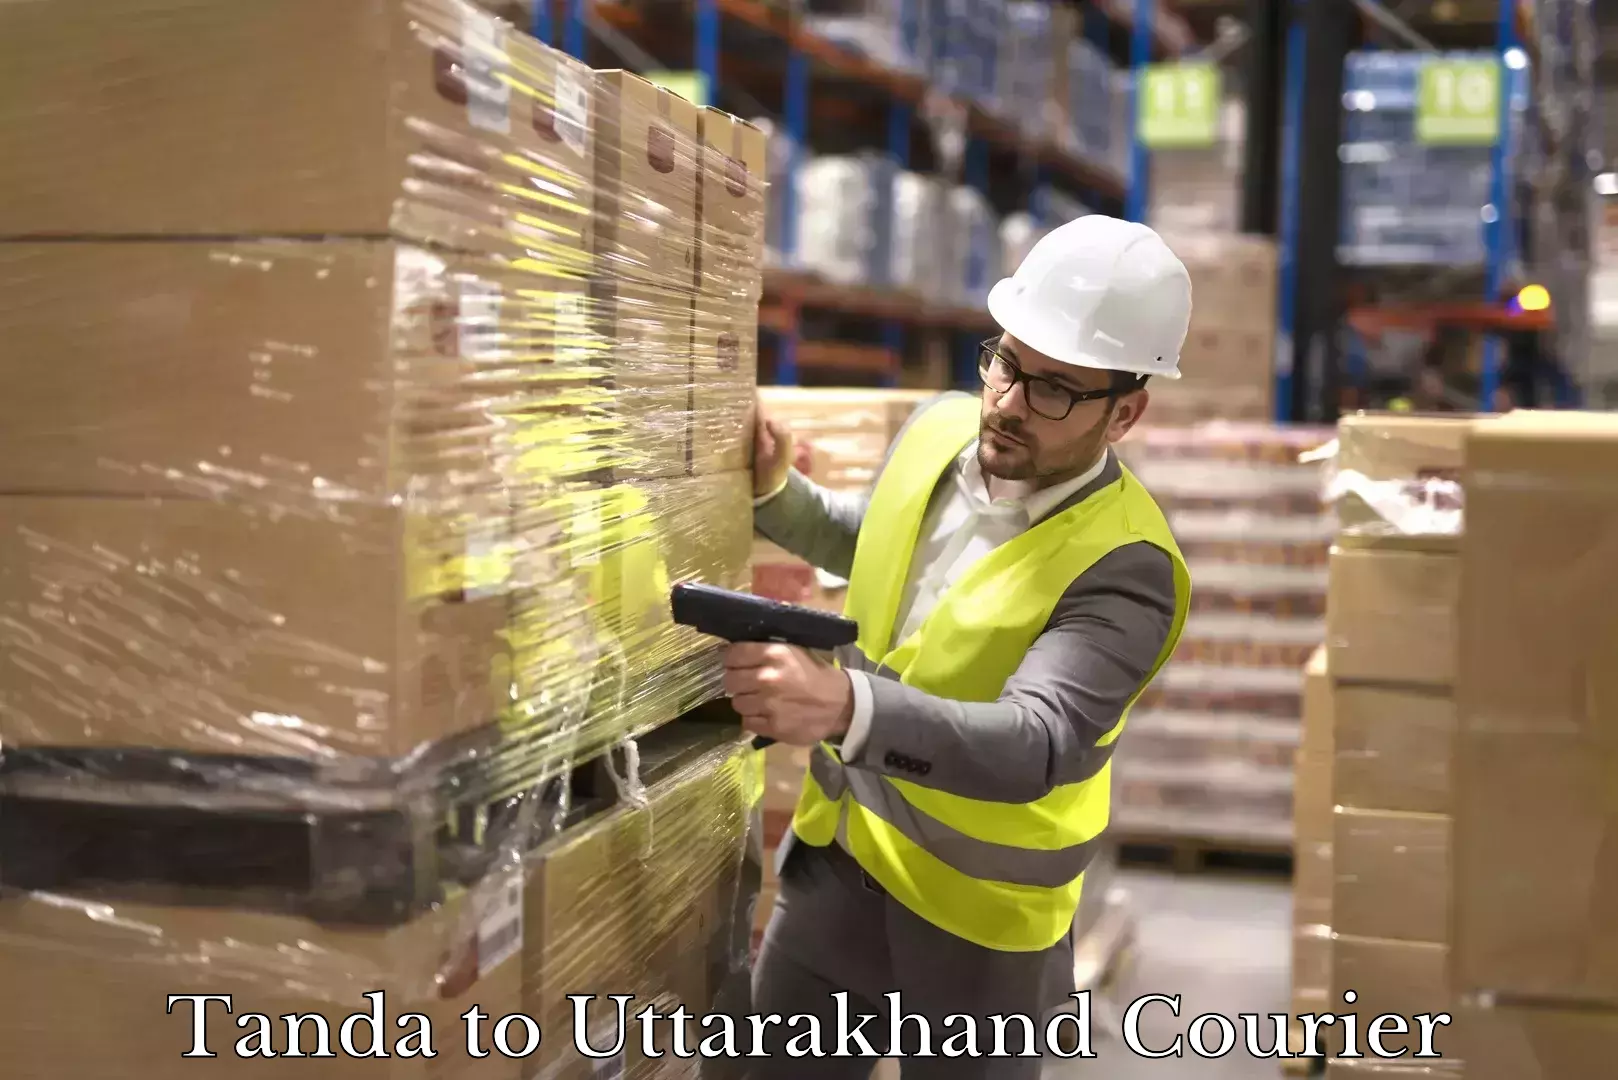 Cargo delivery service Tanda to Uttarakhand